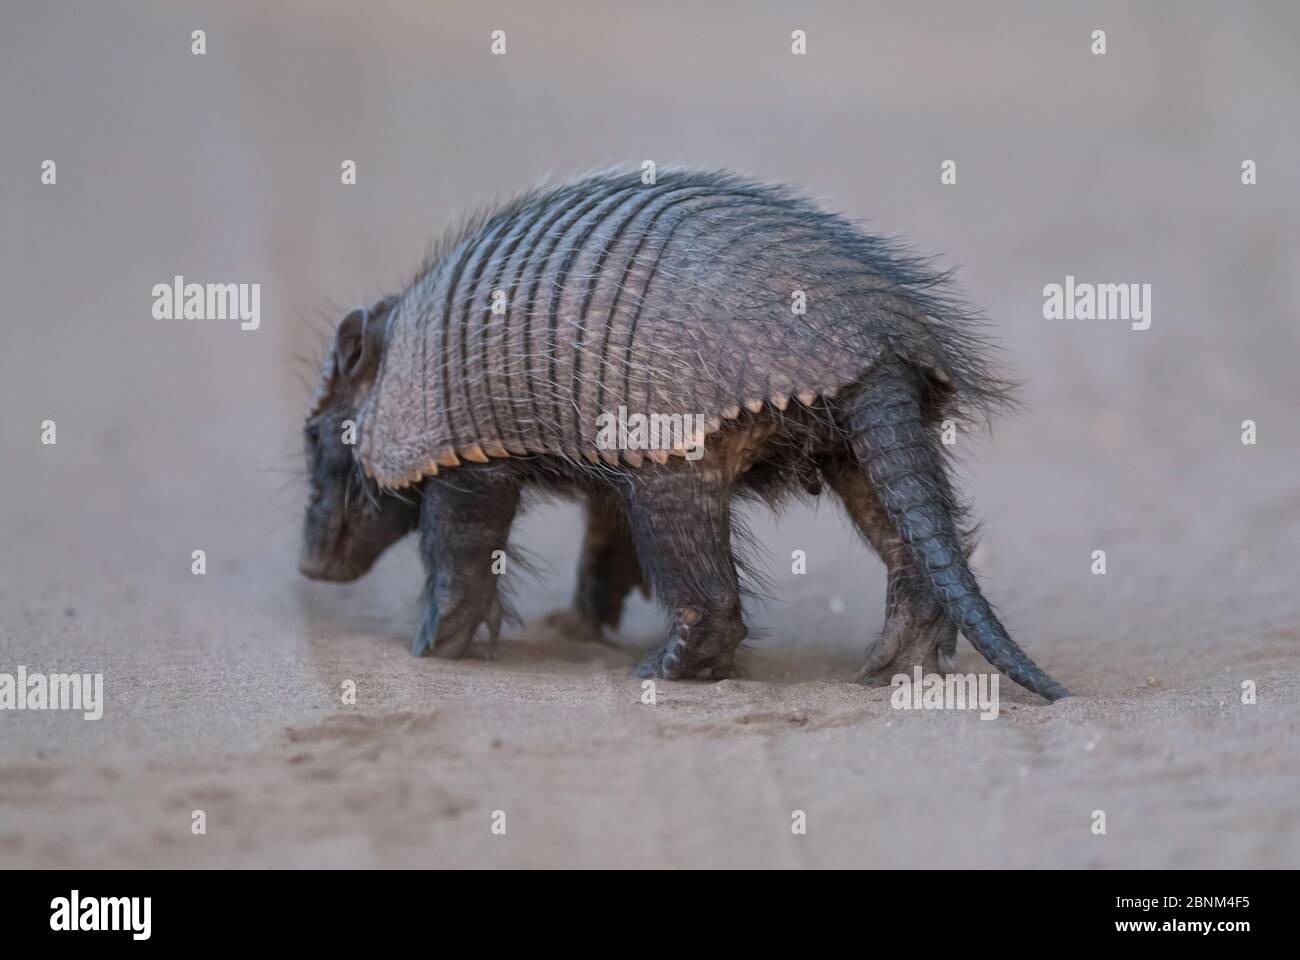 Big hairy armadillo (Chaetophractus villosus), La Pampa, Argentina Stock Photo